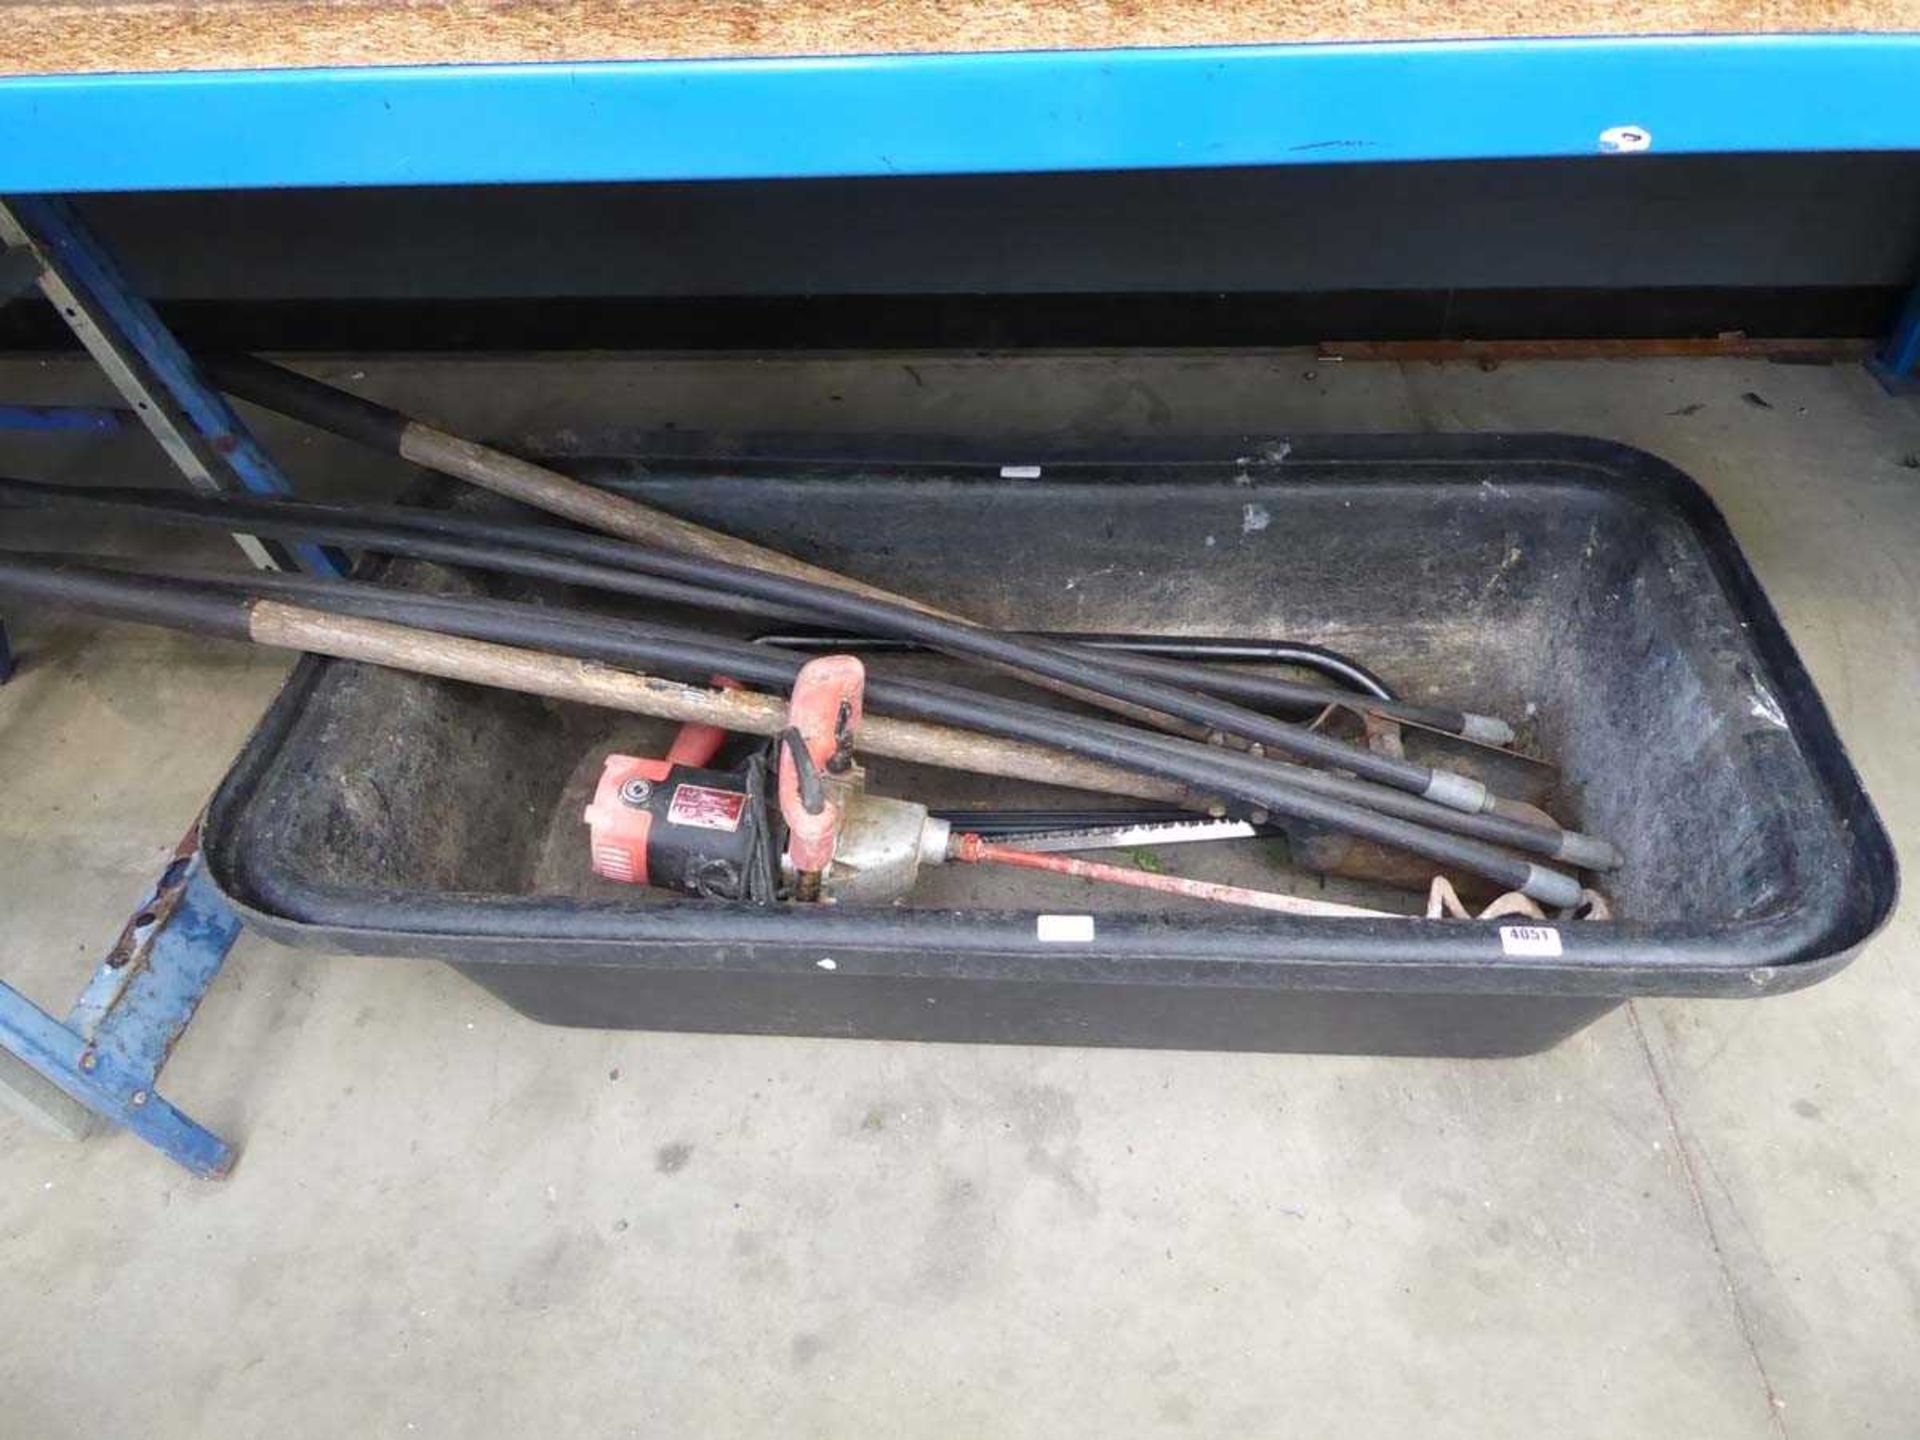 Large builder's trough, plaster mixer, drain rods, and drain shovel